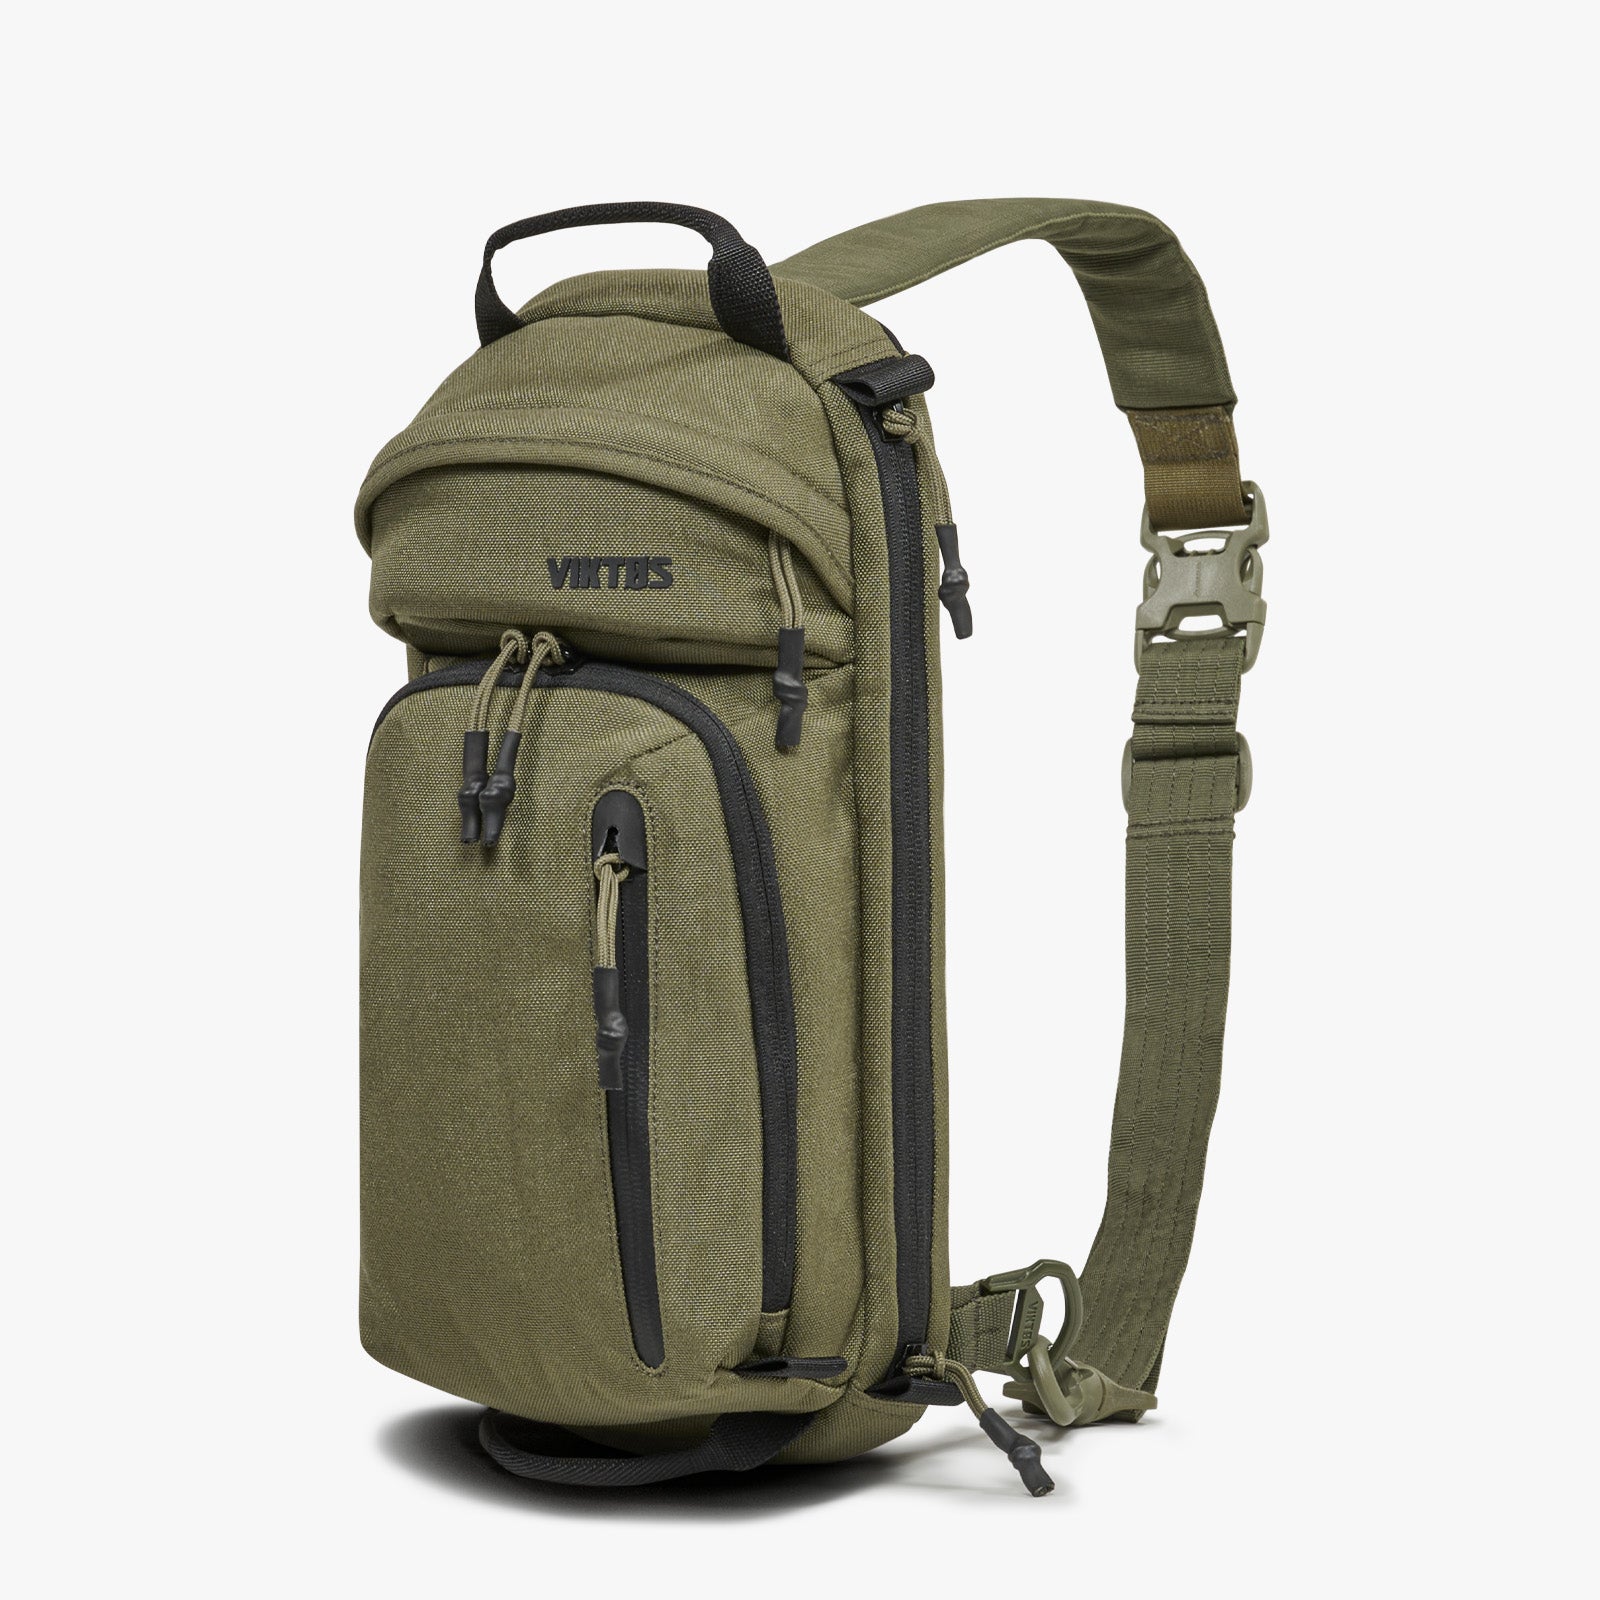 VIKTOS Upscale 3 Sling Bag Bags, Packs and Cases VIKTOS Ranger Tactical Gear Supplier Tactical Distributors Australia